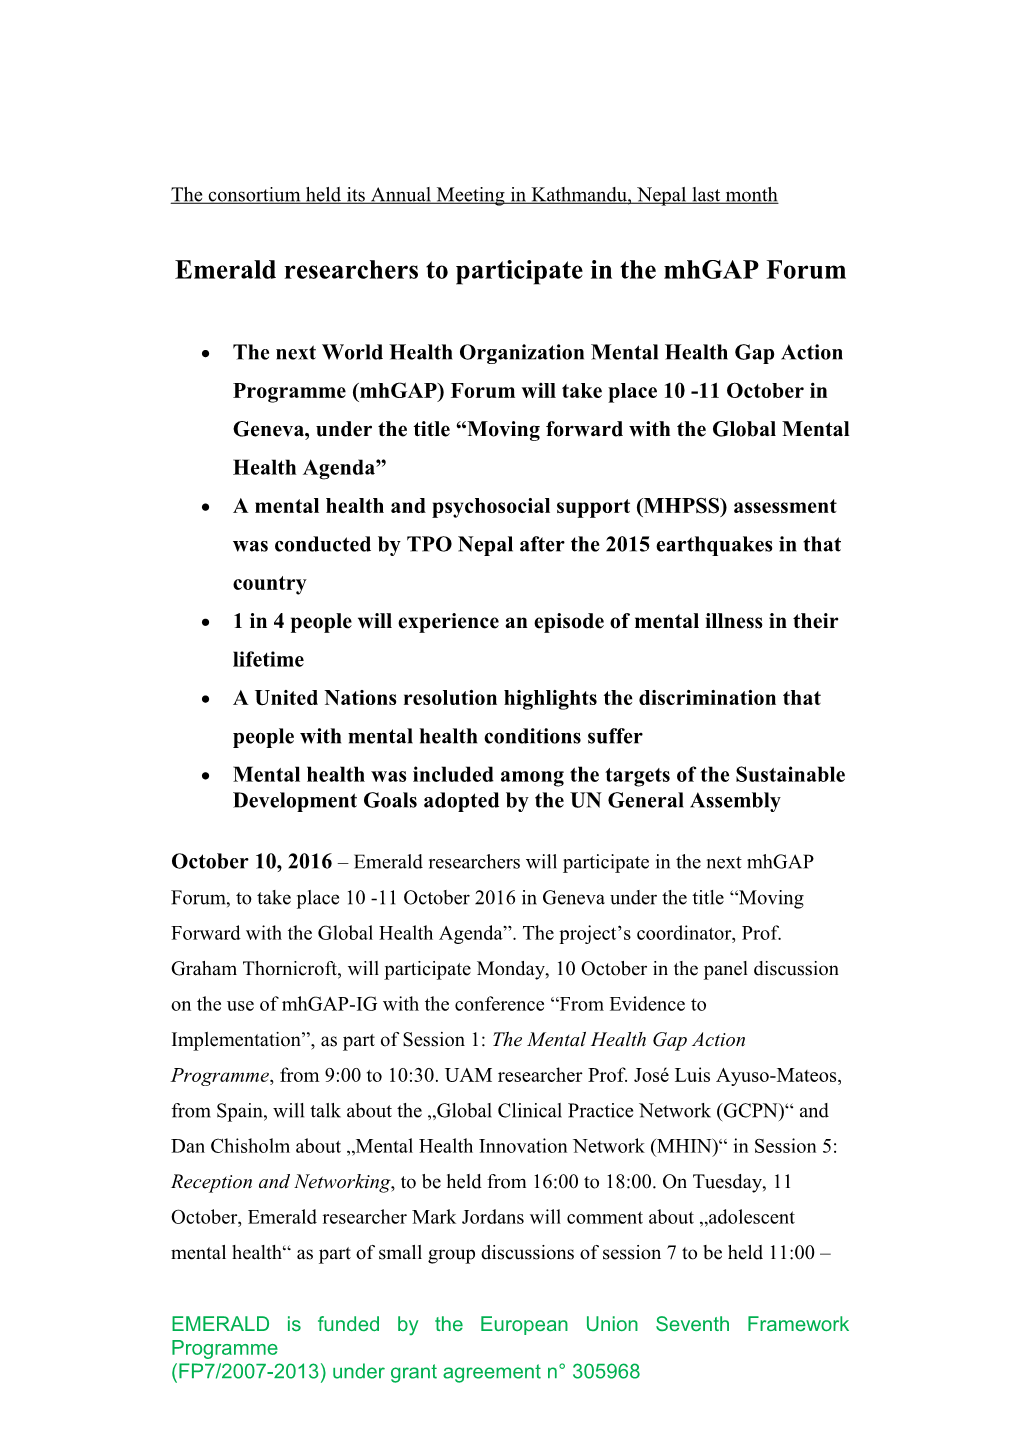 Emerald Researchers to Participate in the Mhgap Forum